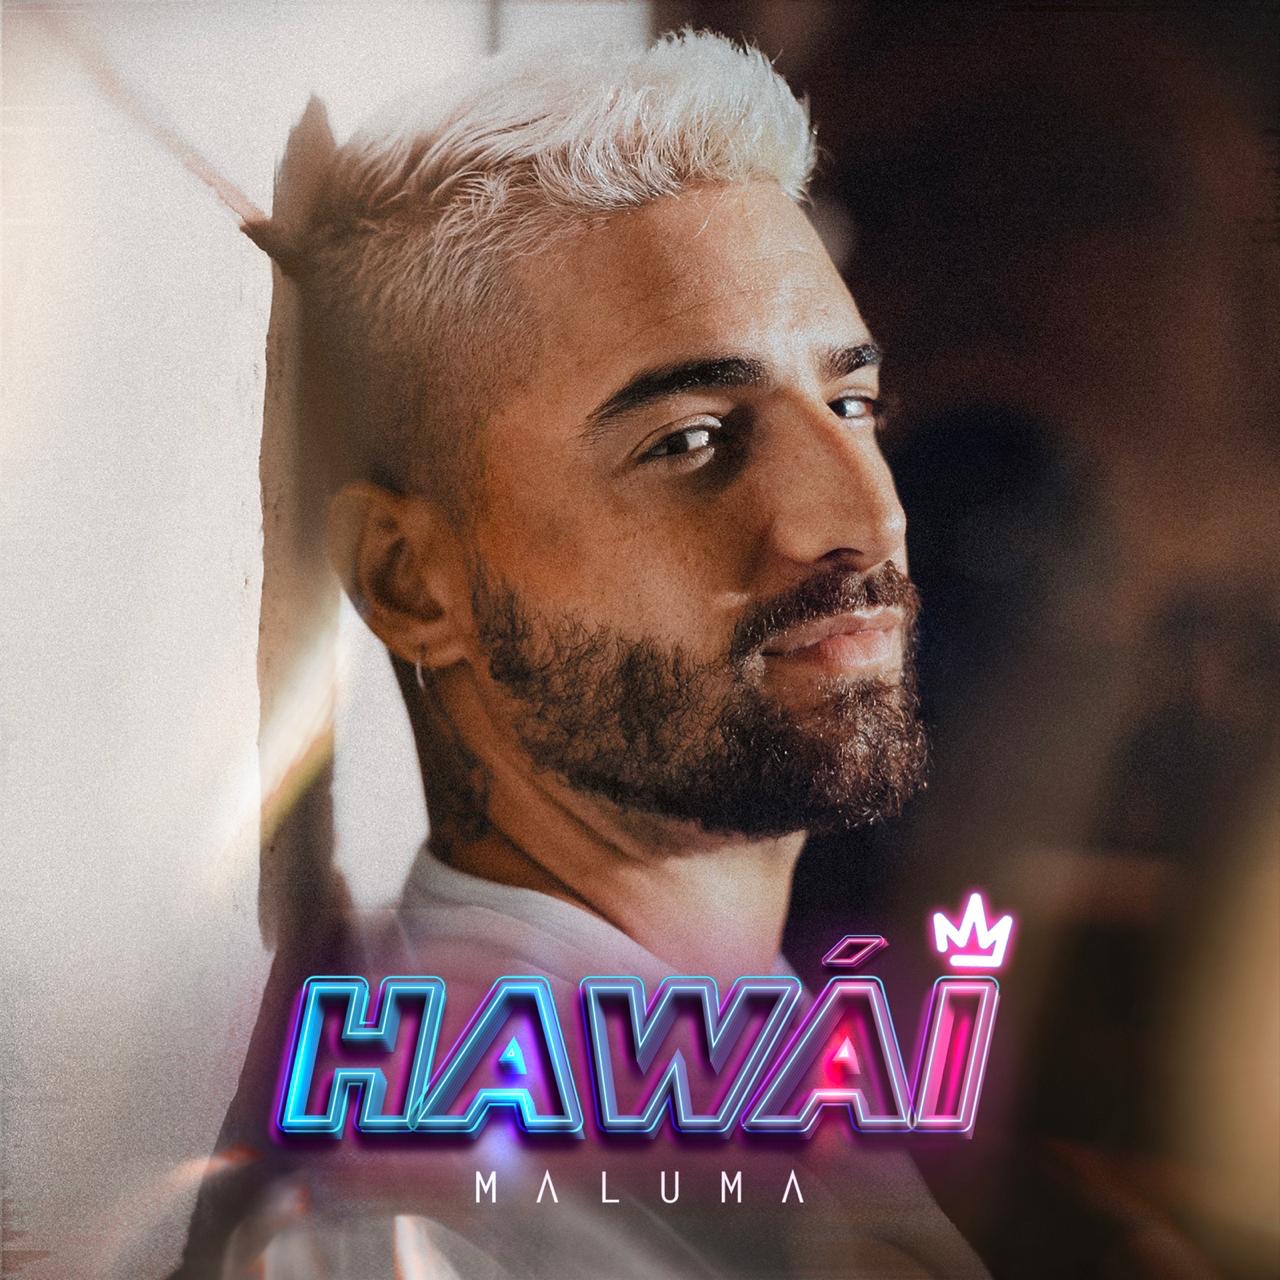 MALUMA RELEASES HIS NEW SINGLE & VIDEO “HAWÁI” Walter Kolm Entertainment